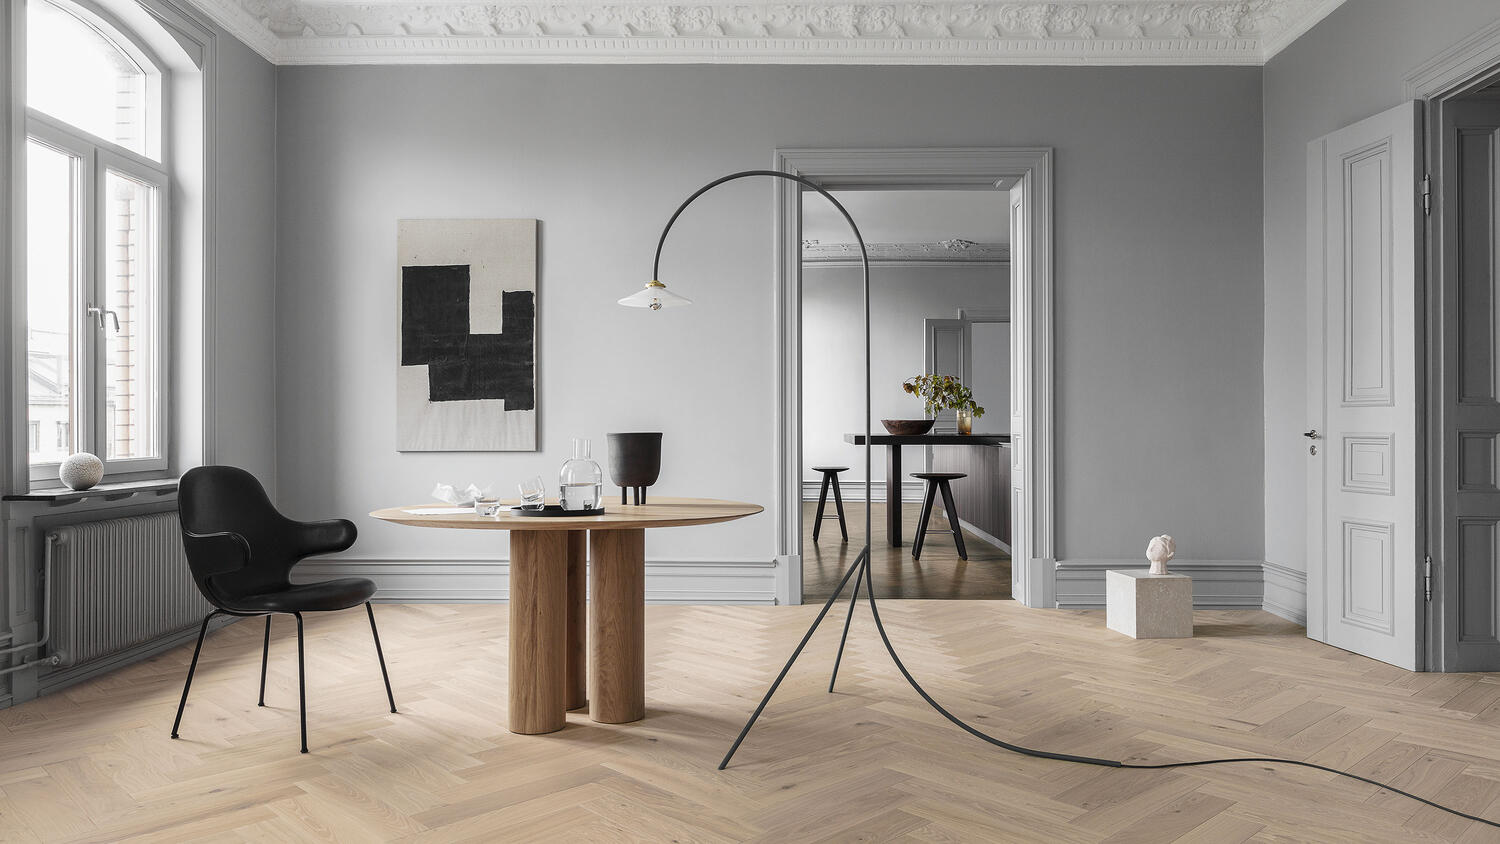 Choosing Minimalist Furniture and Décor